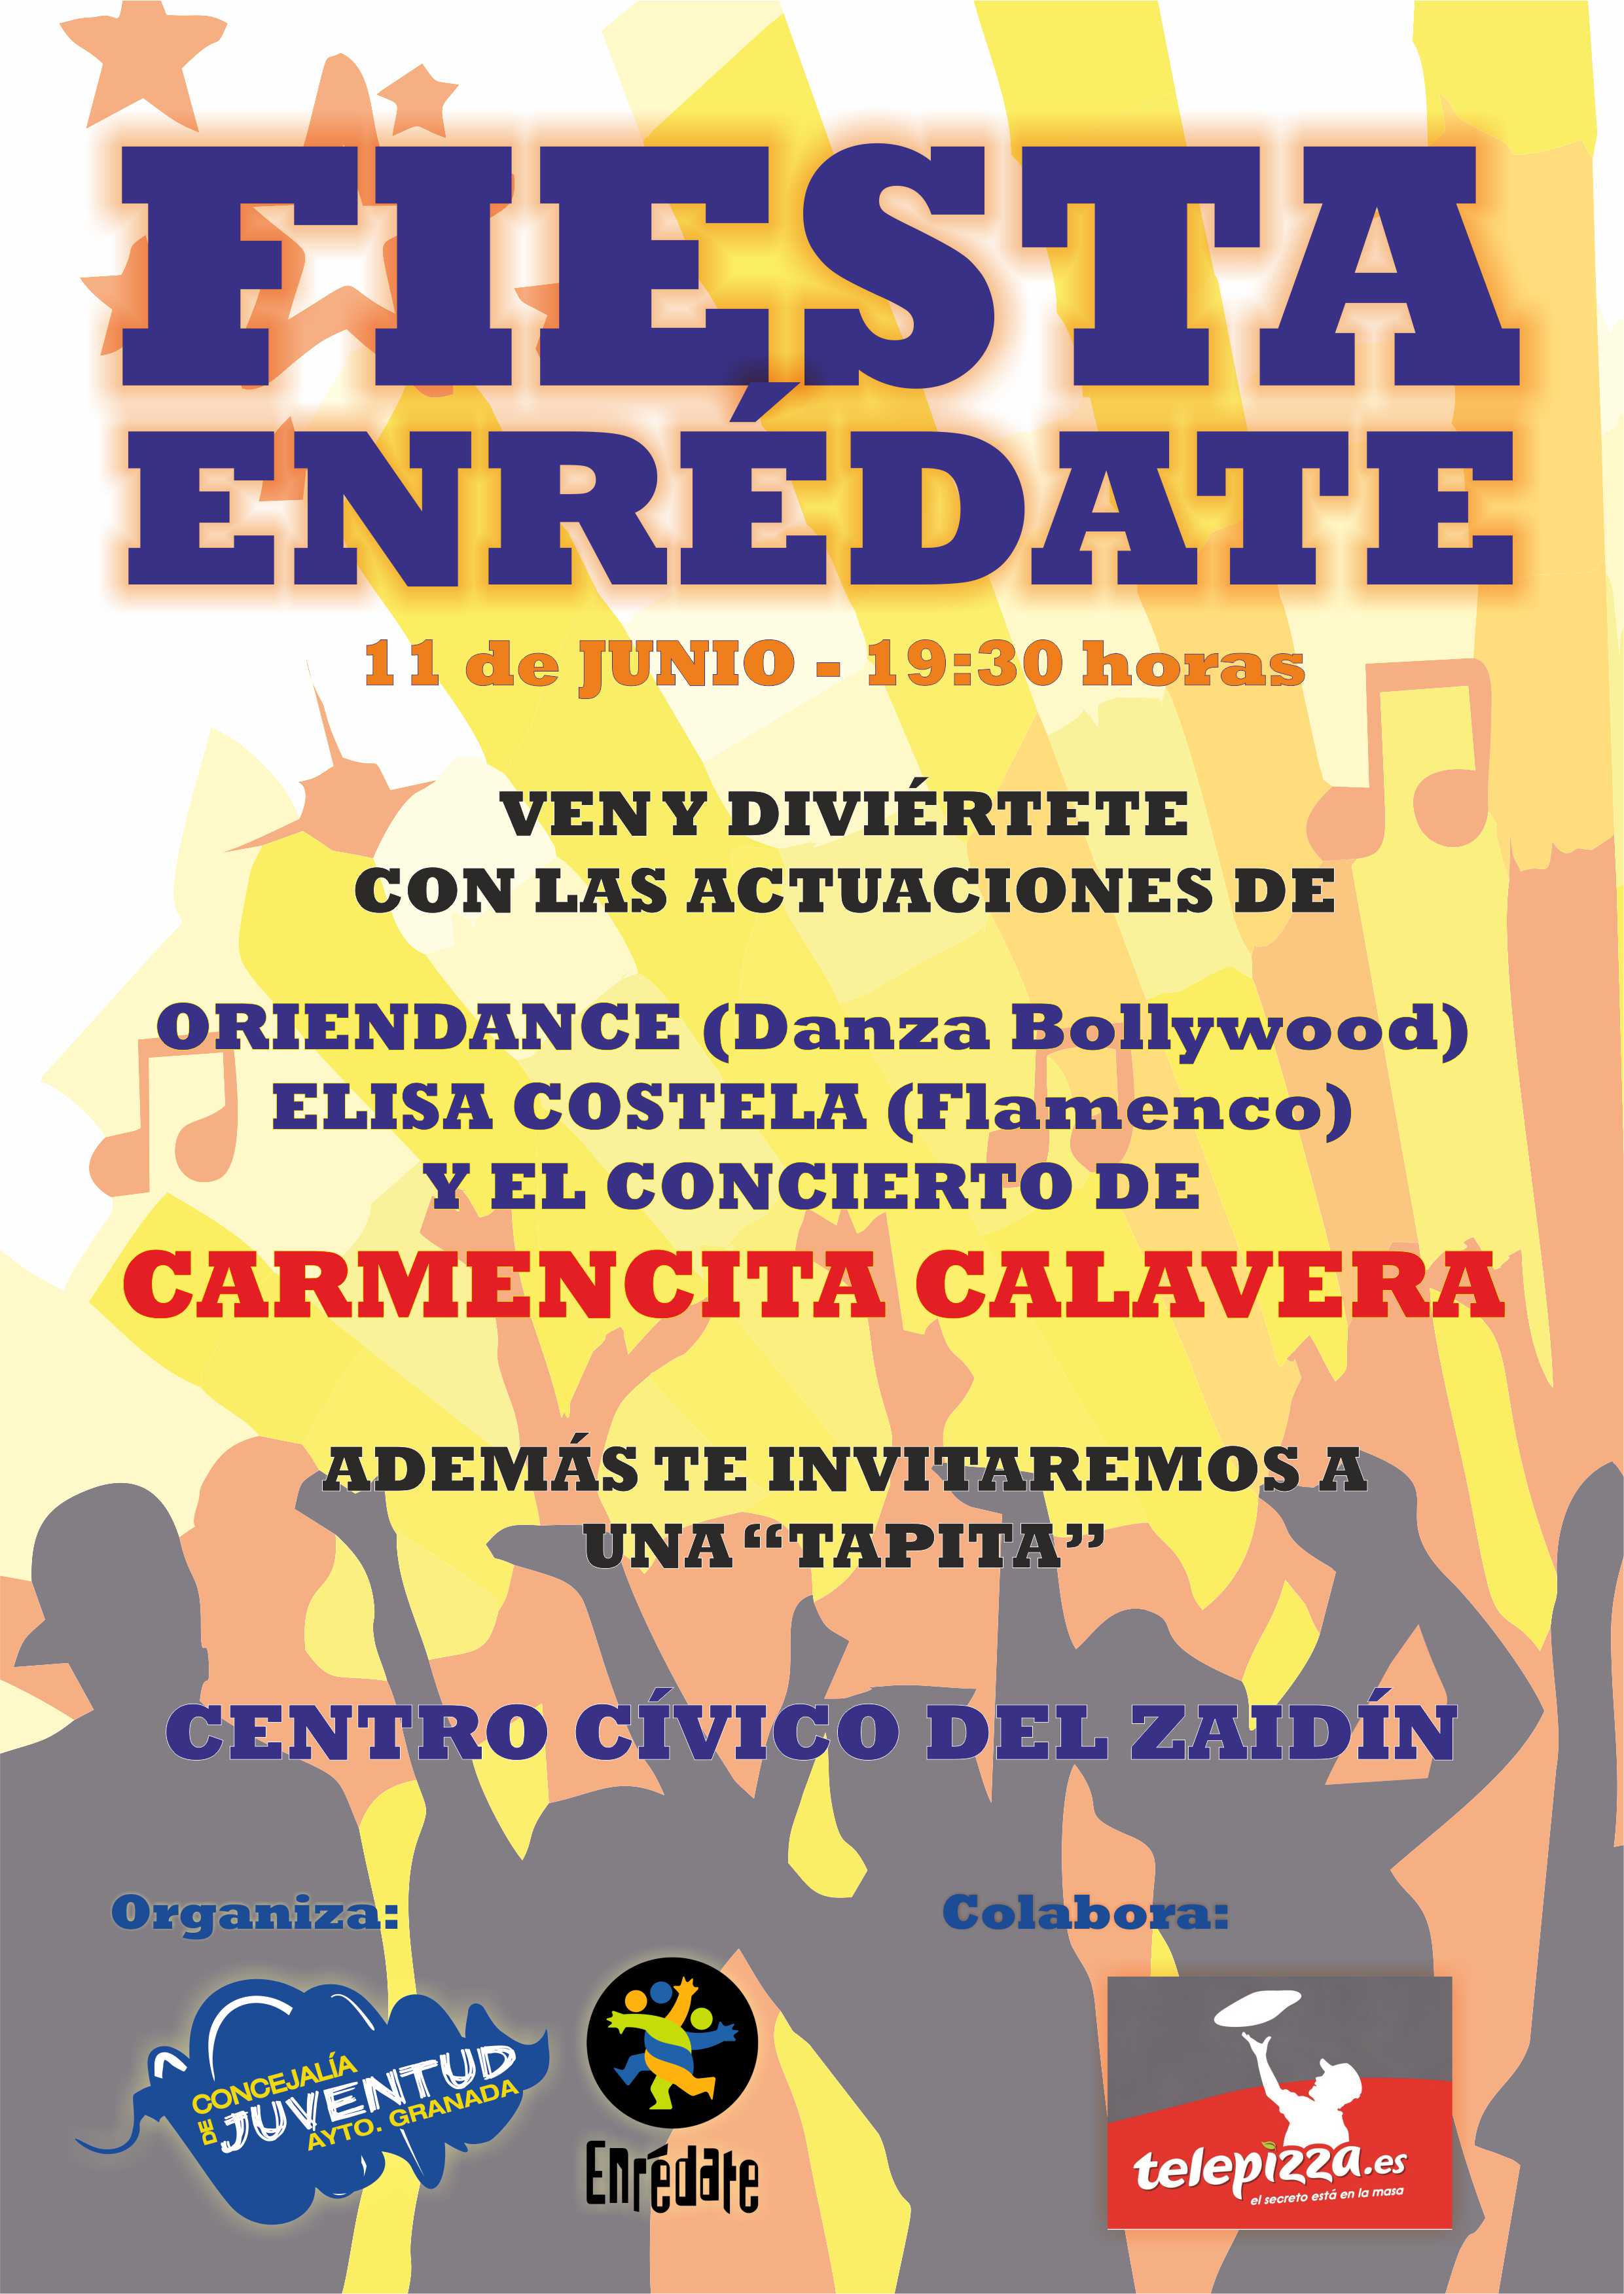 ©Ayto.Granada: Enredate: Fiesta enredate!!